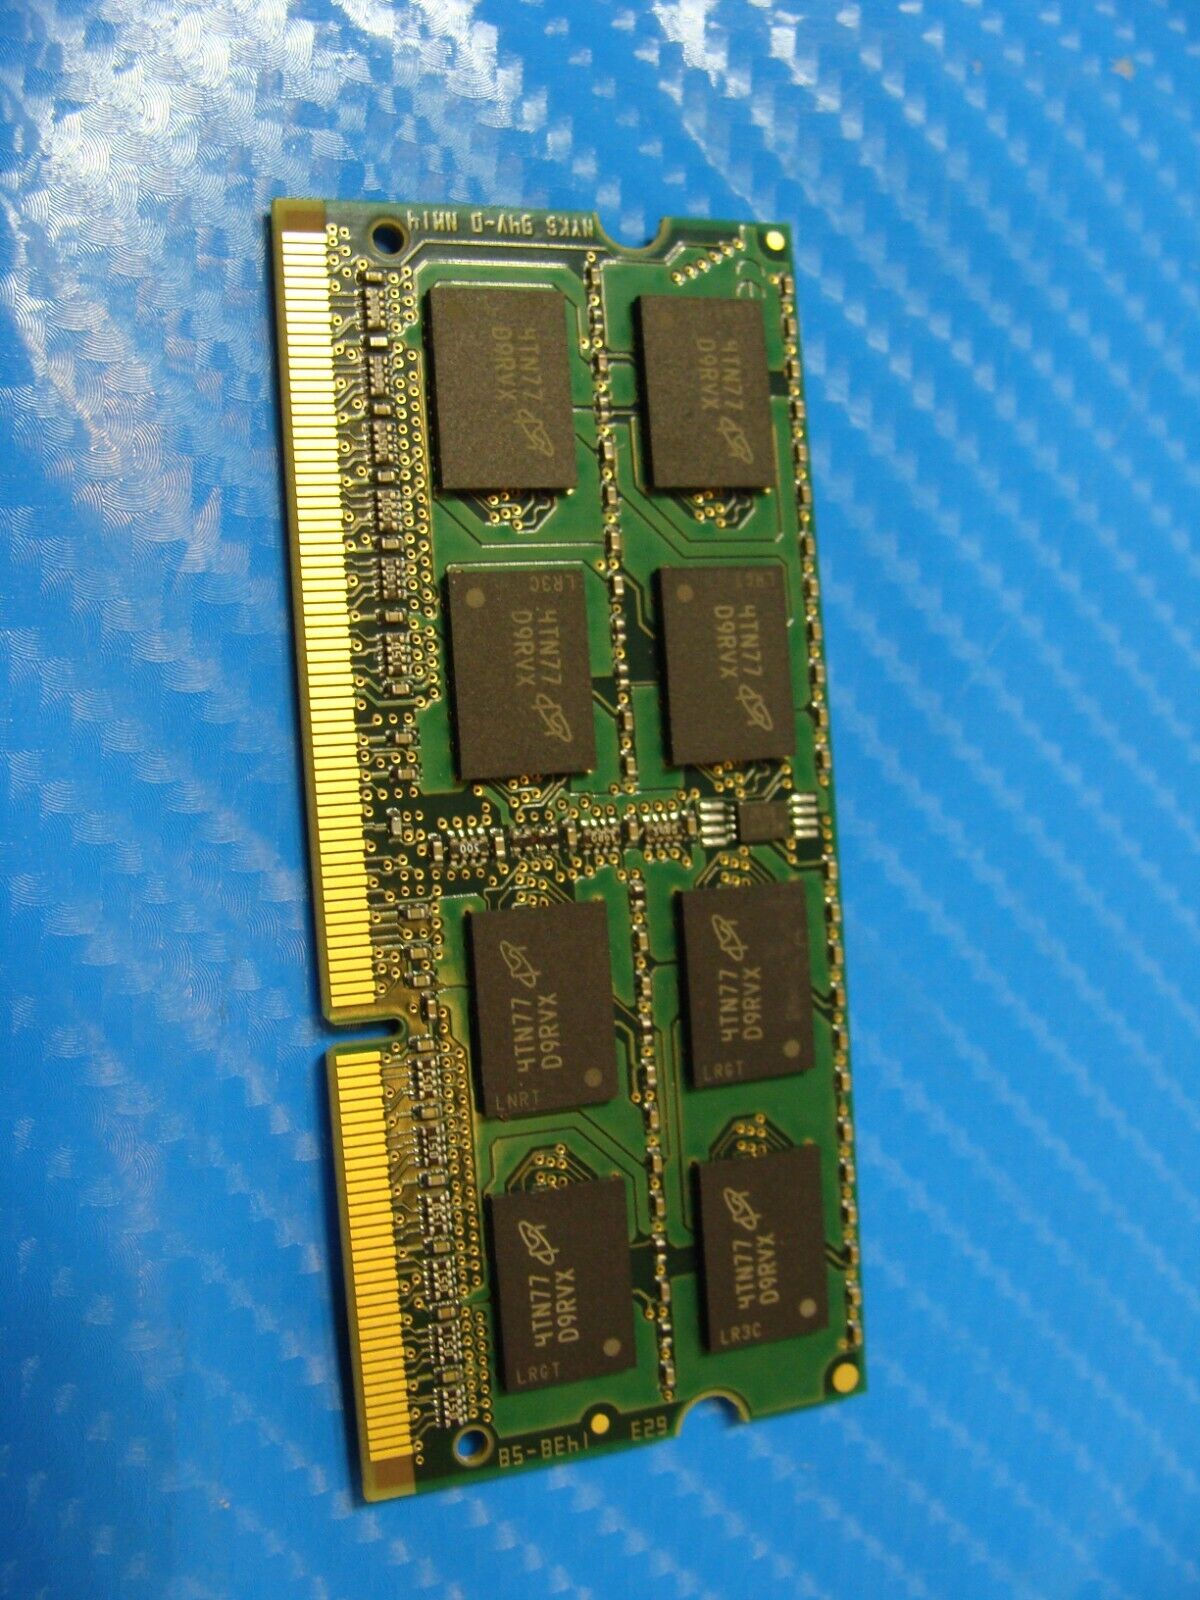 Lenovo T540P Kingston 8GB Memory RAM SO-DIMM 9905428-087.A00LF KTL-TP3CL/8G